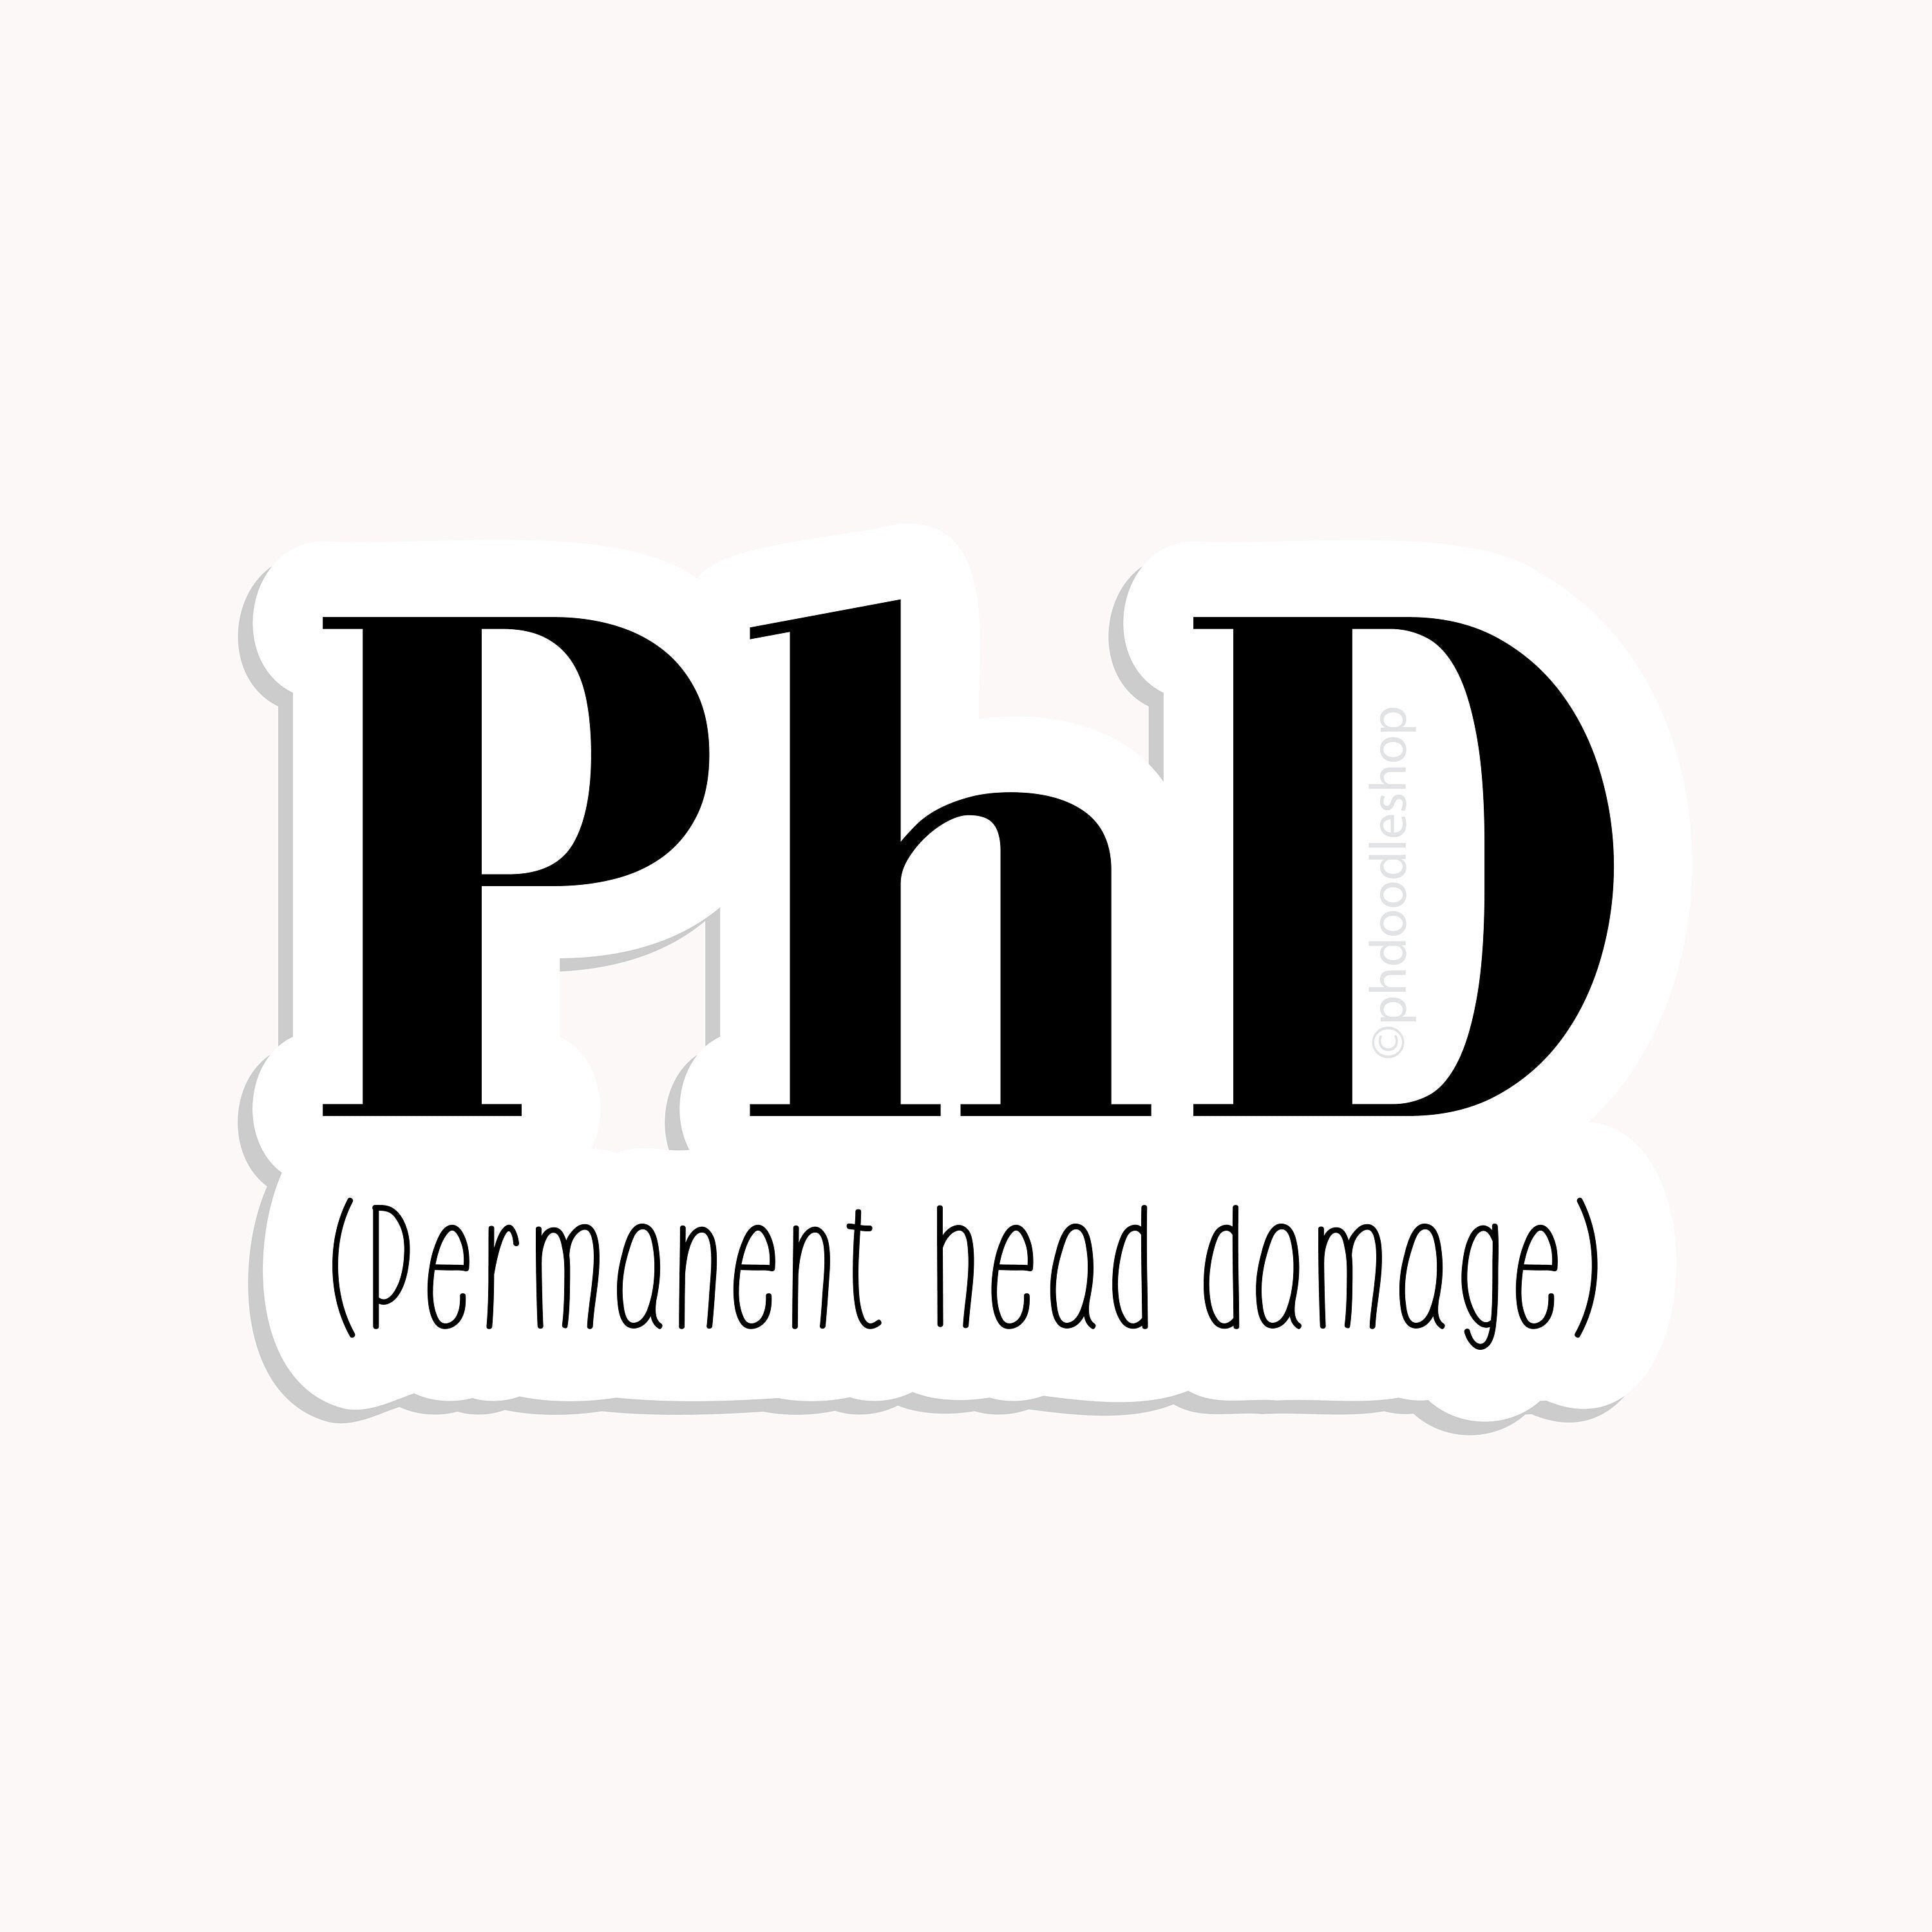 PhD (.abb) Permanent head damage Sticker for Sale by Safwen